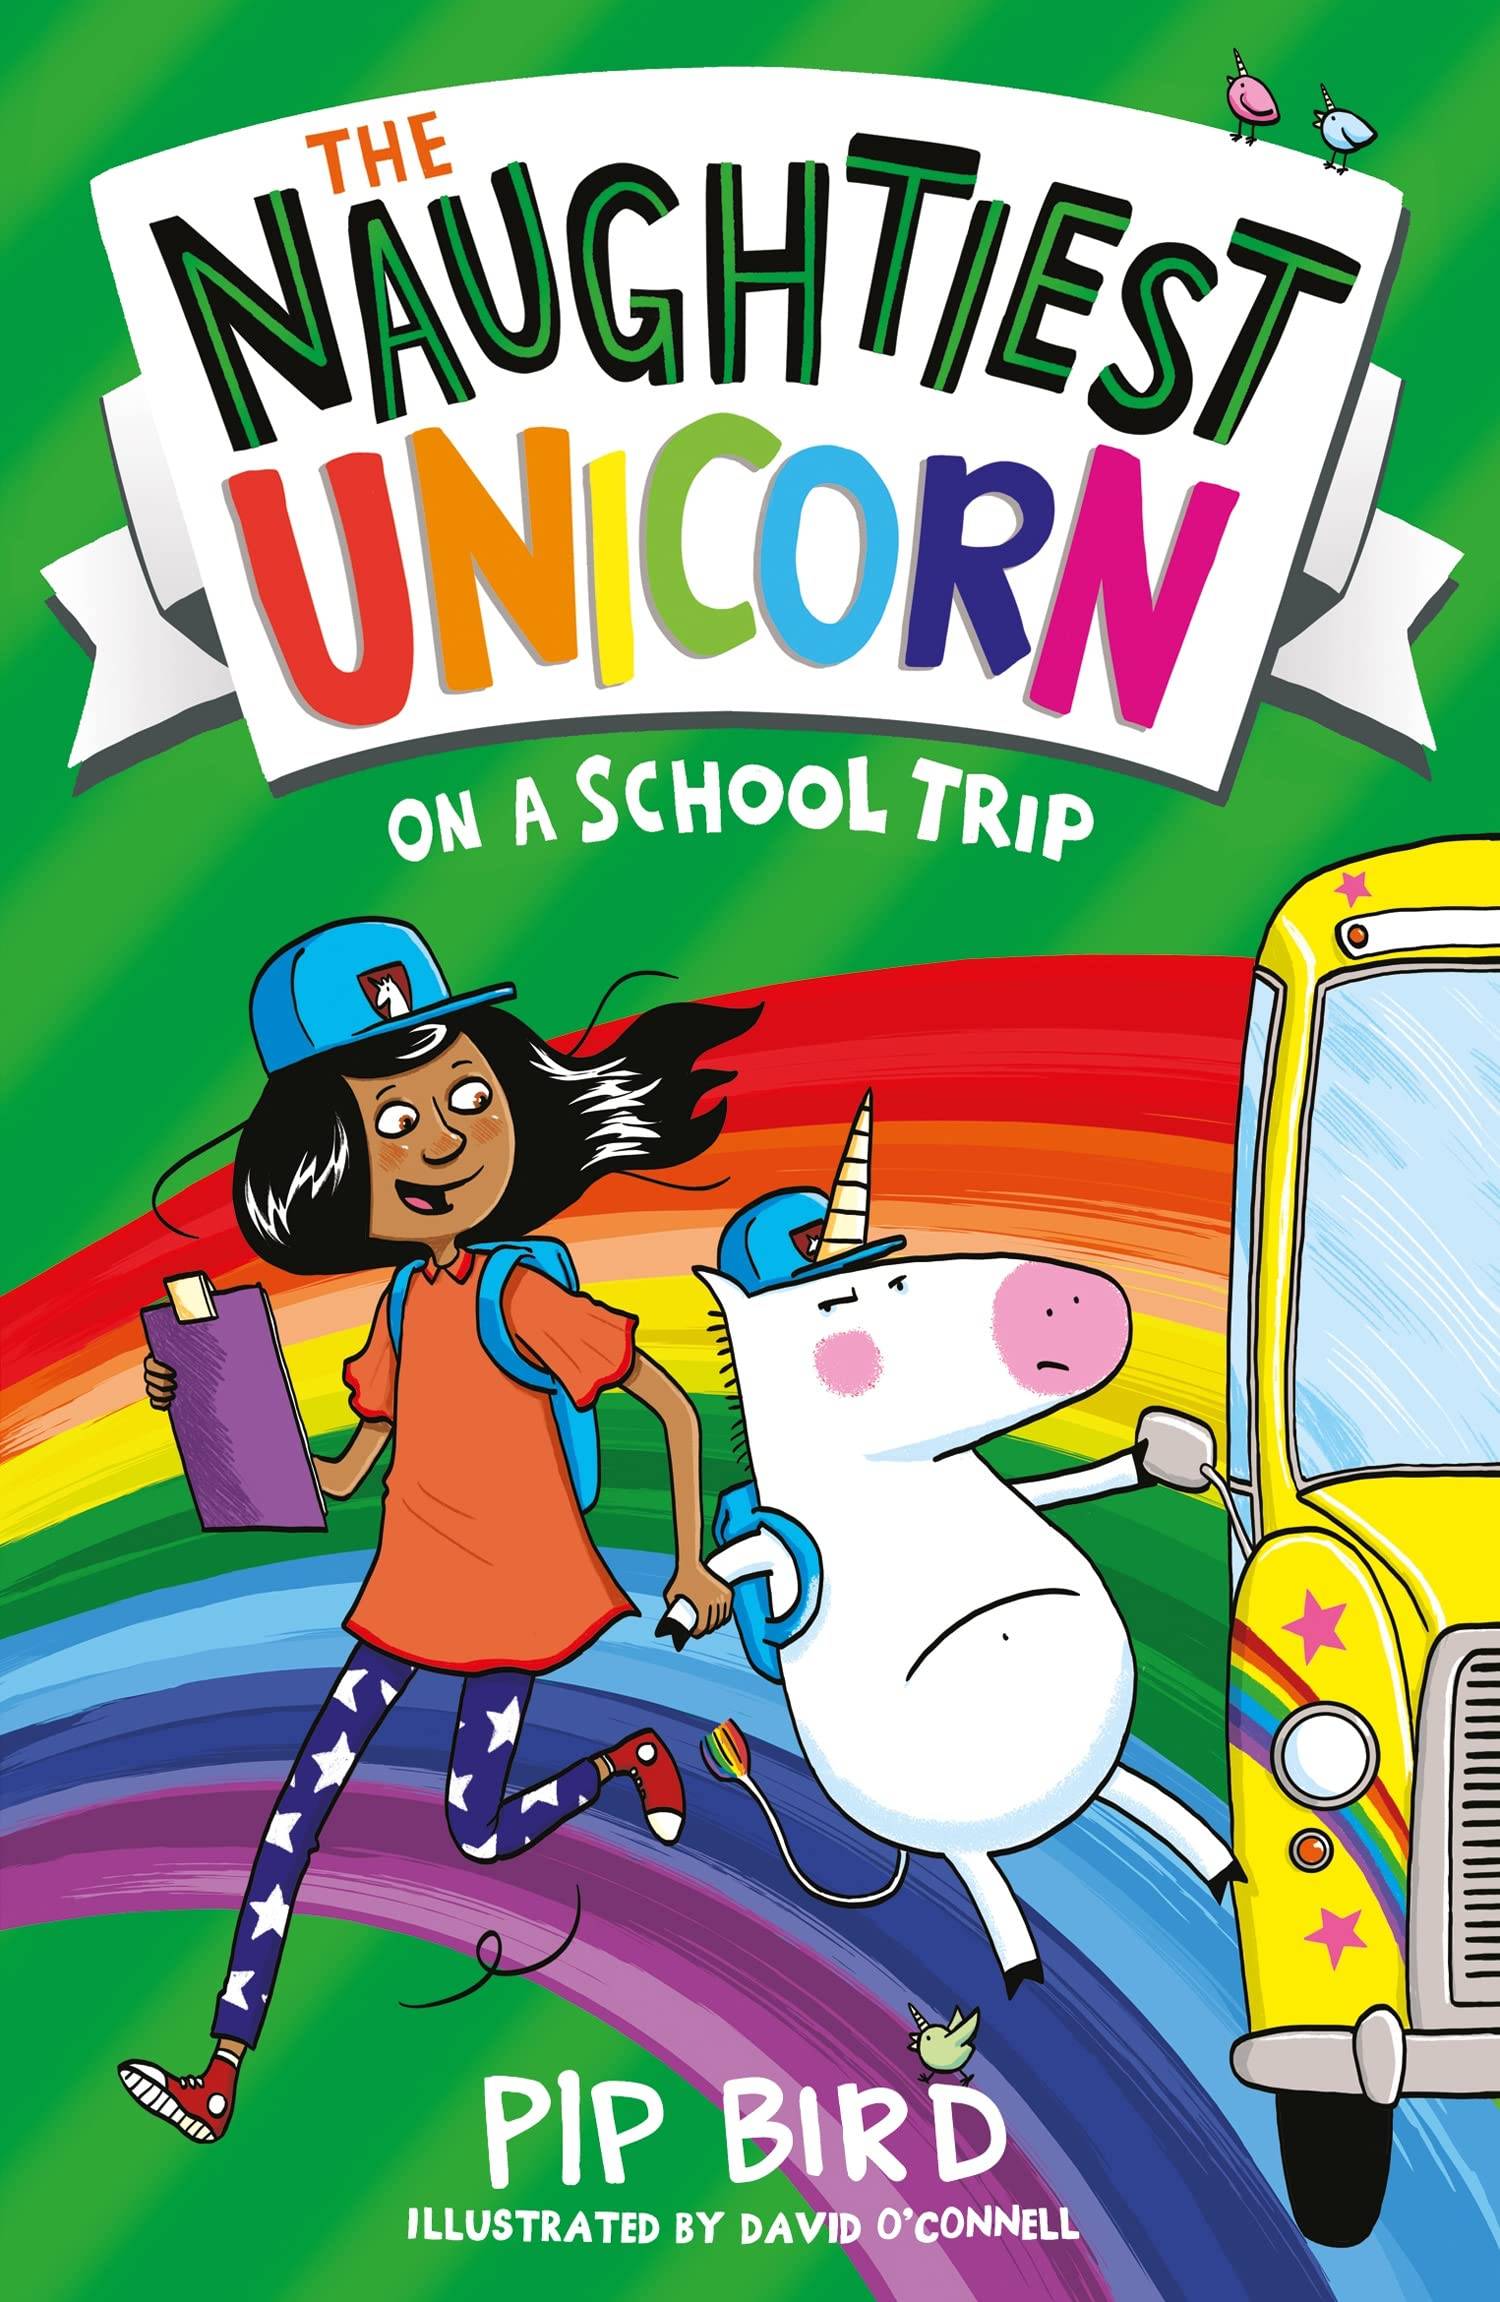 IMG : The Naughtiest Unicorn on a School Trip